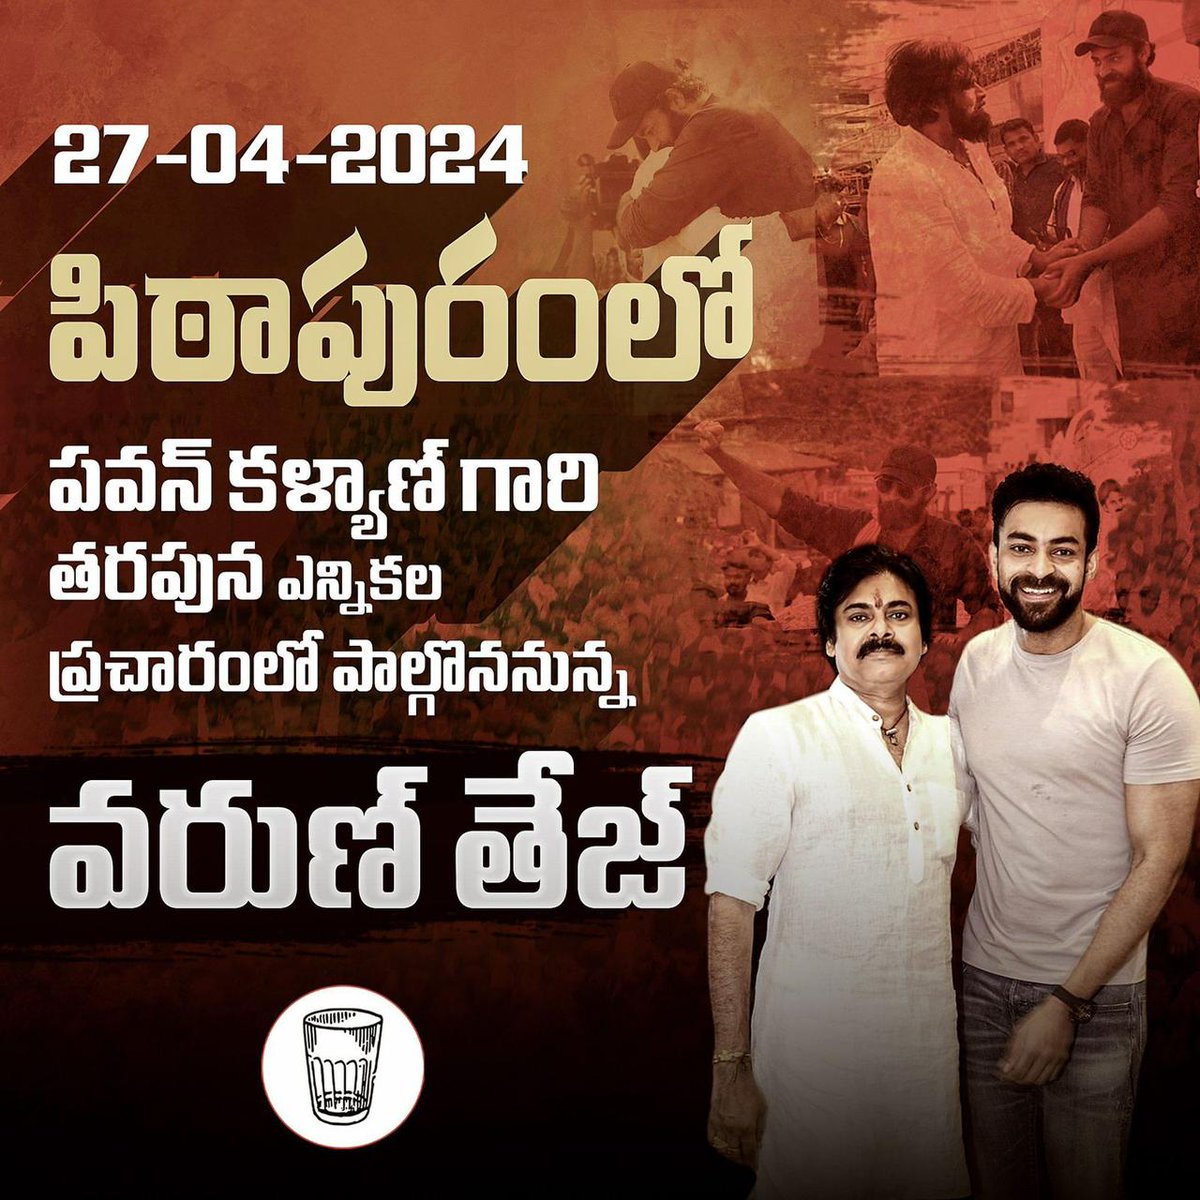 Actor #VarunTej to campaign for Janasenani in Pithapuram tomorrow!